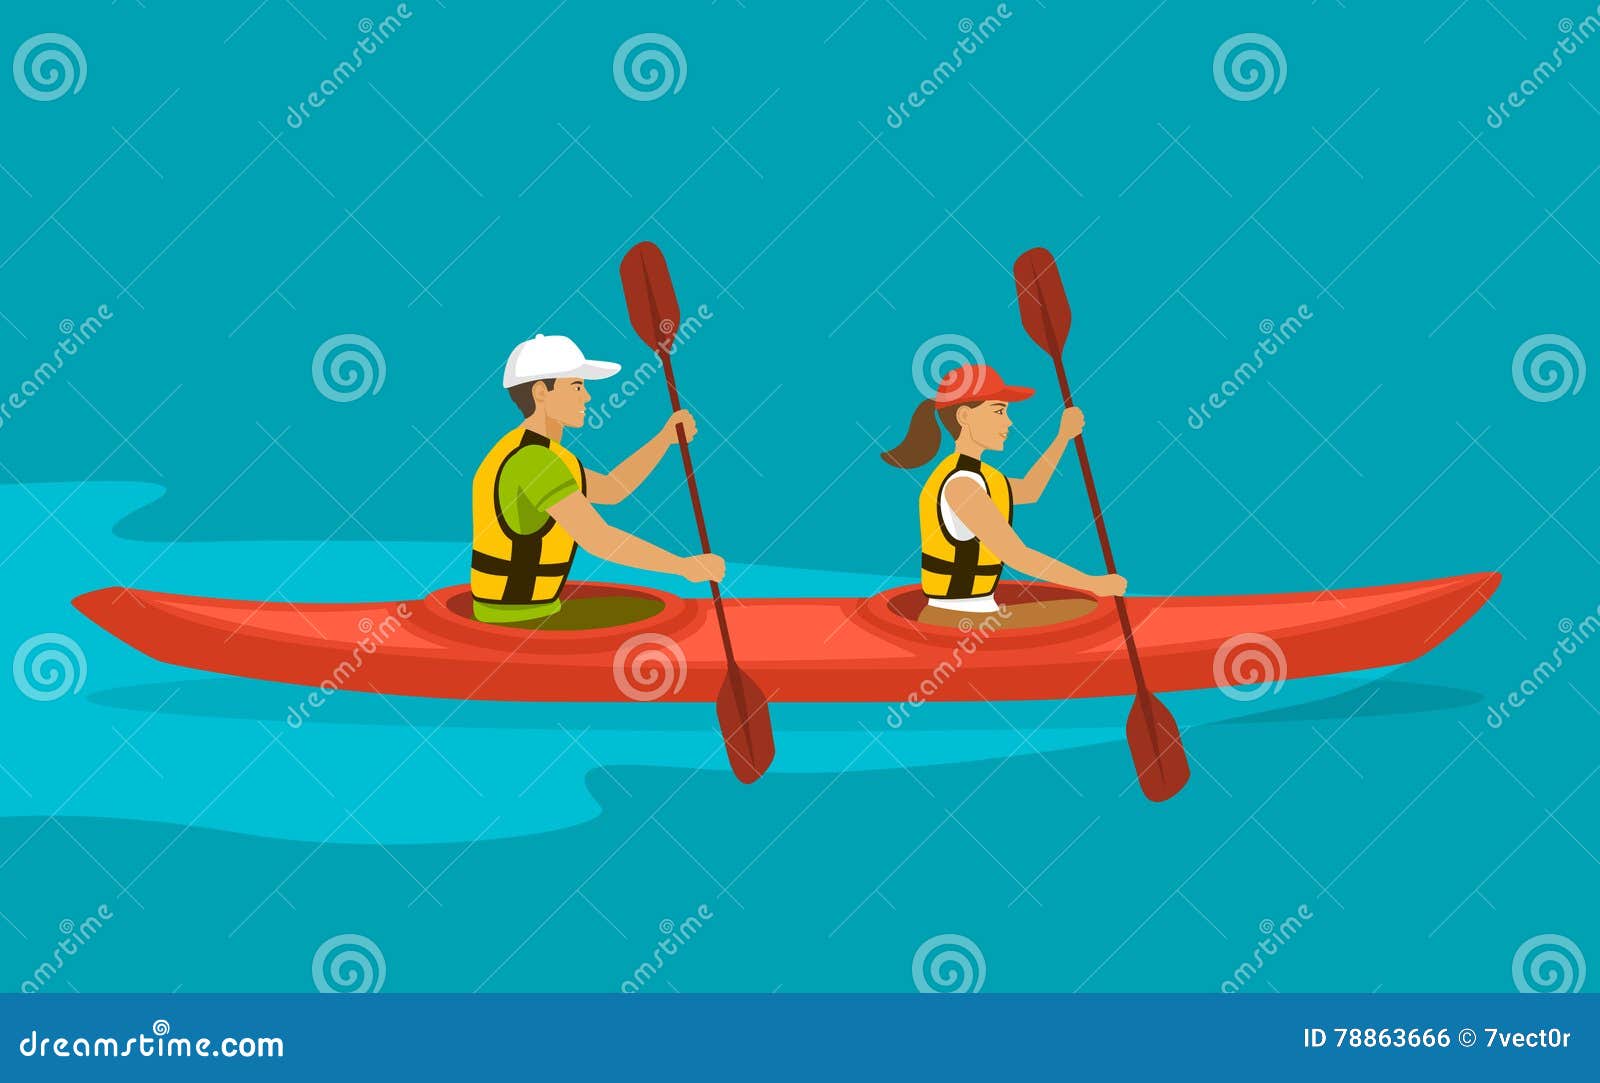 couple rowing paddling in double kayak